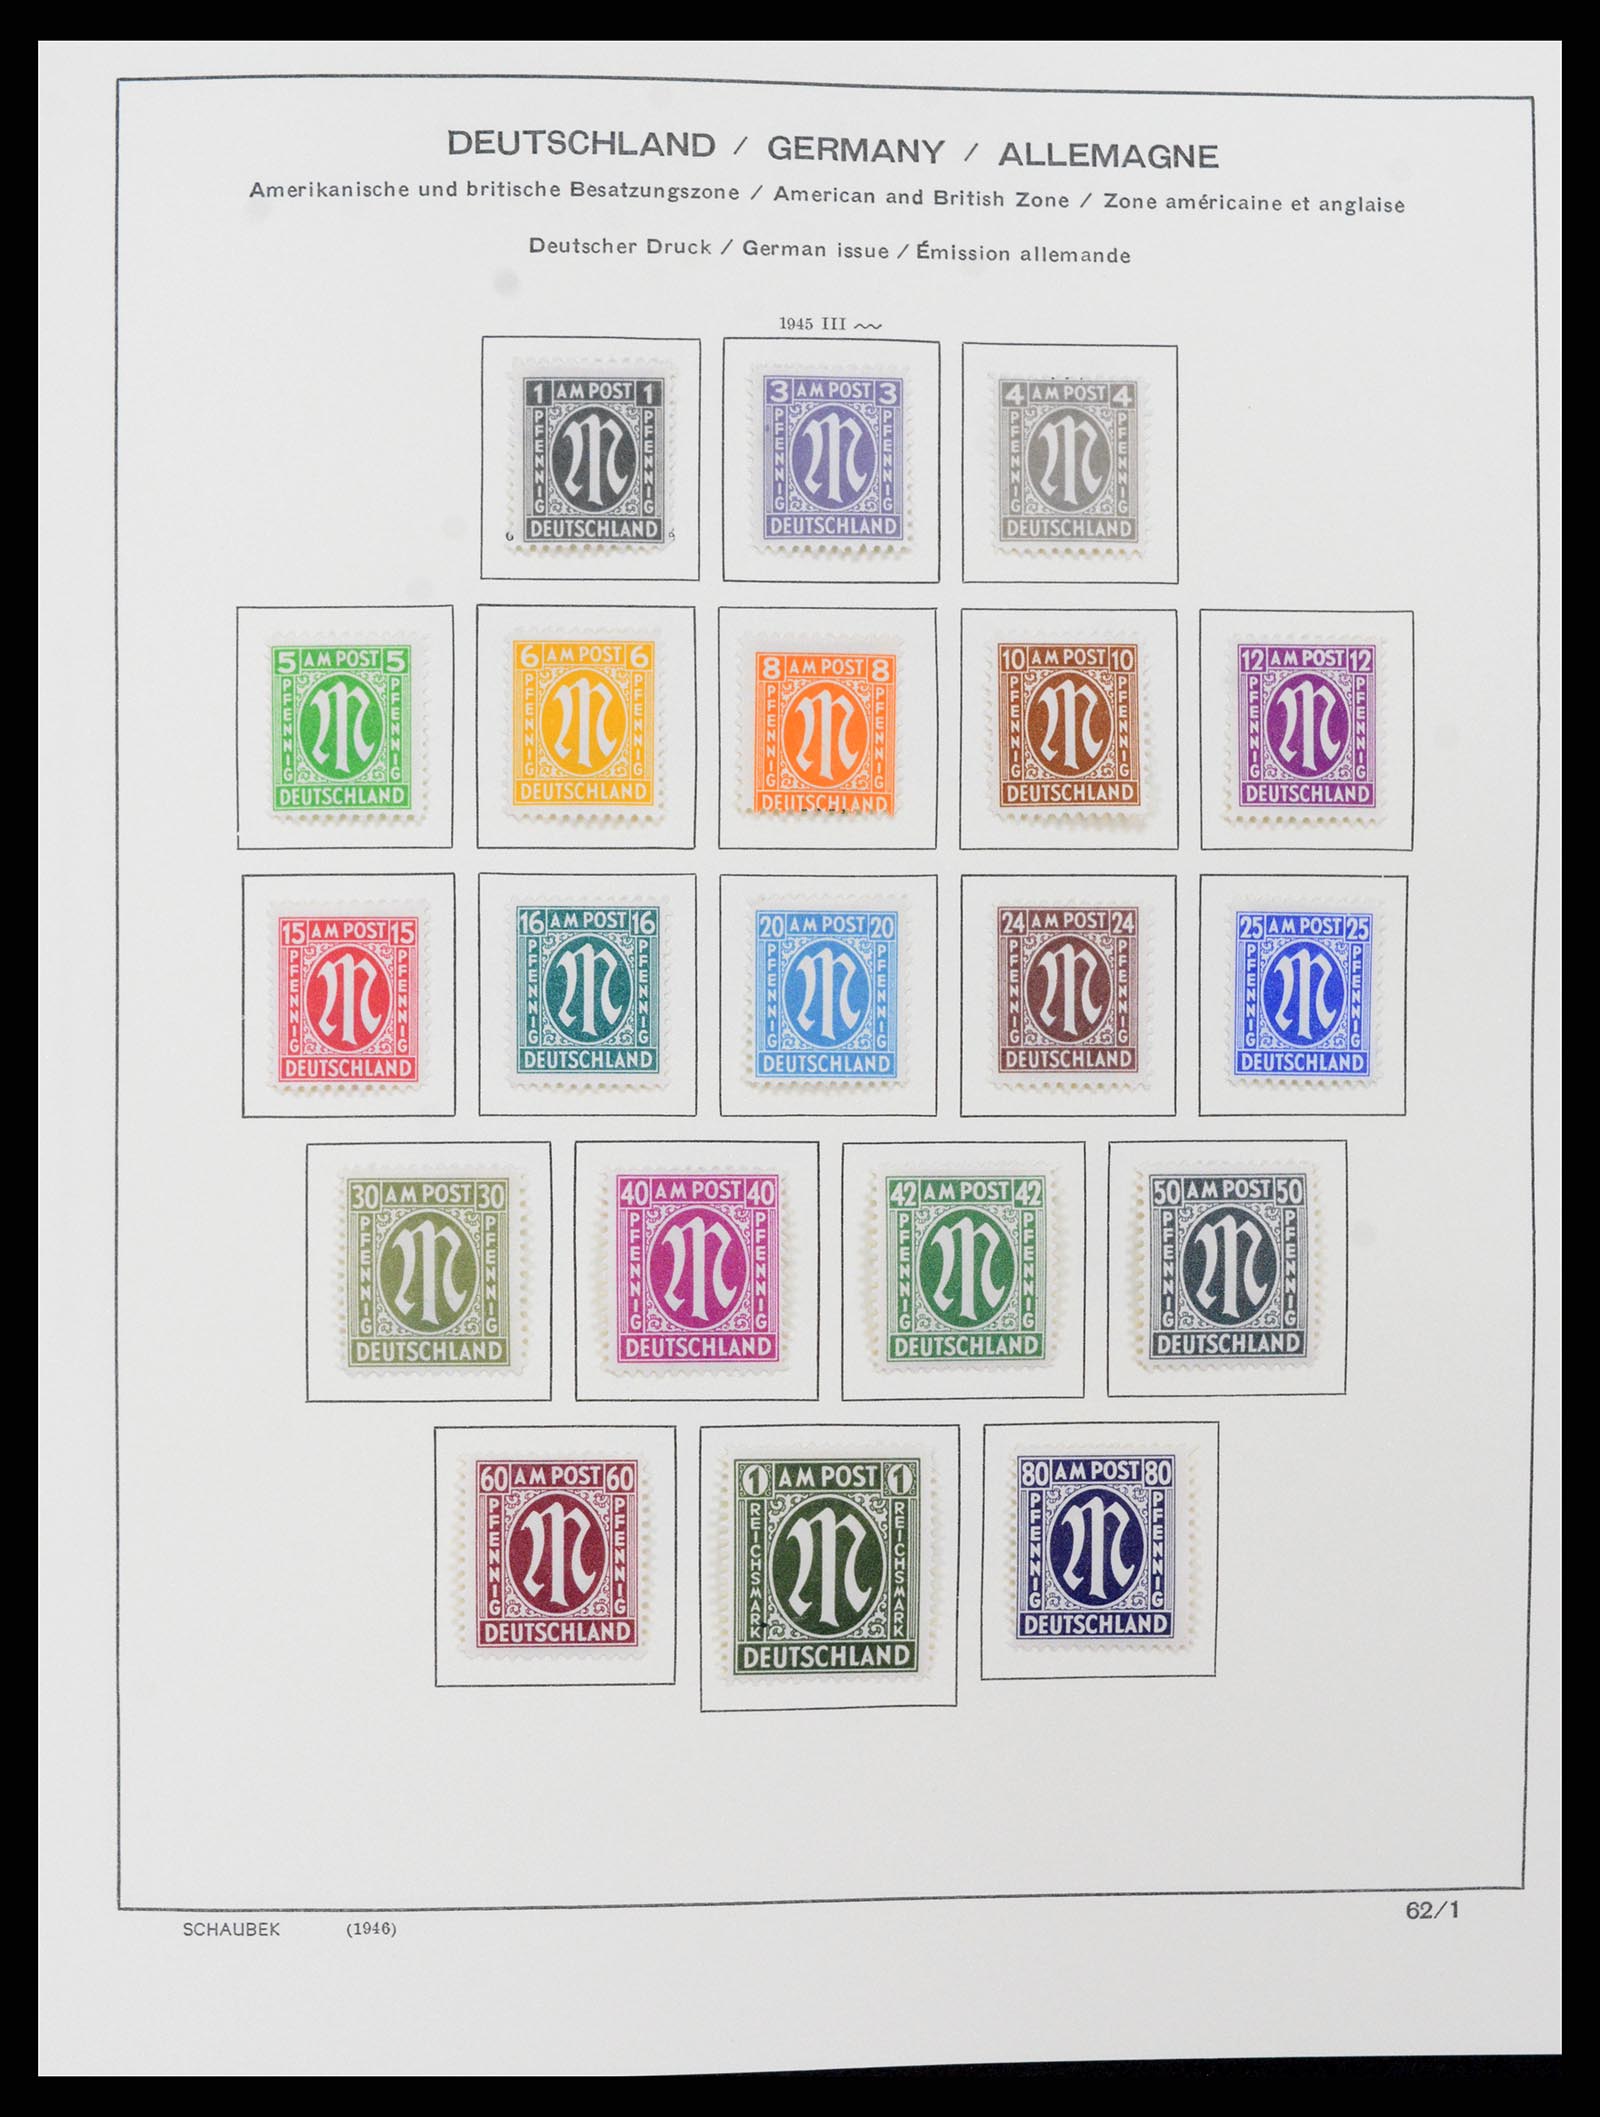 37645 008 - Stamp collection 37645 German Zones 1945-1949.